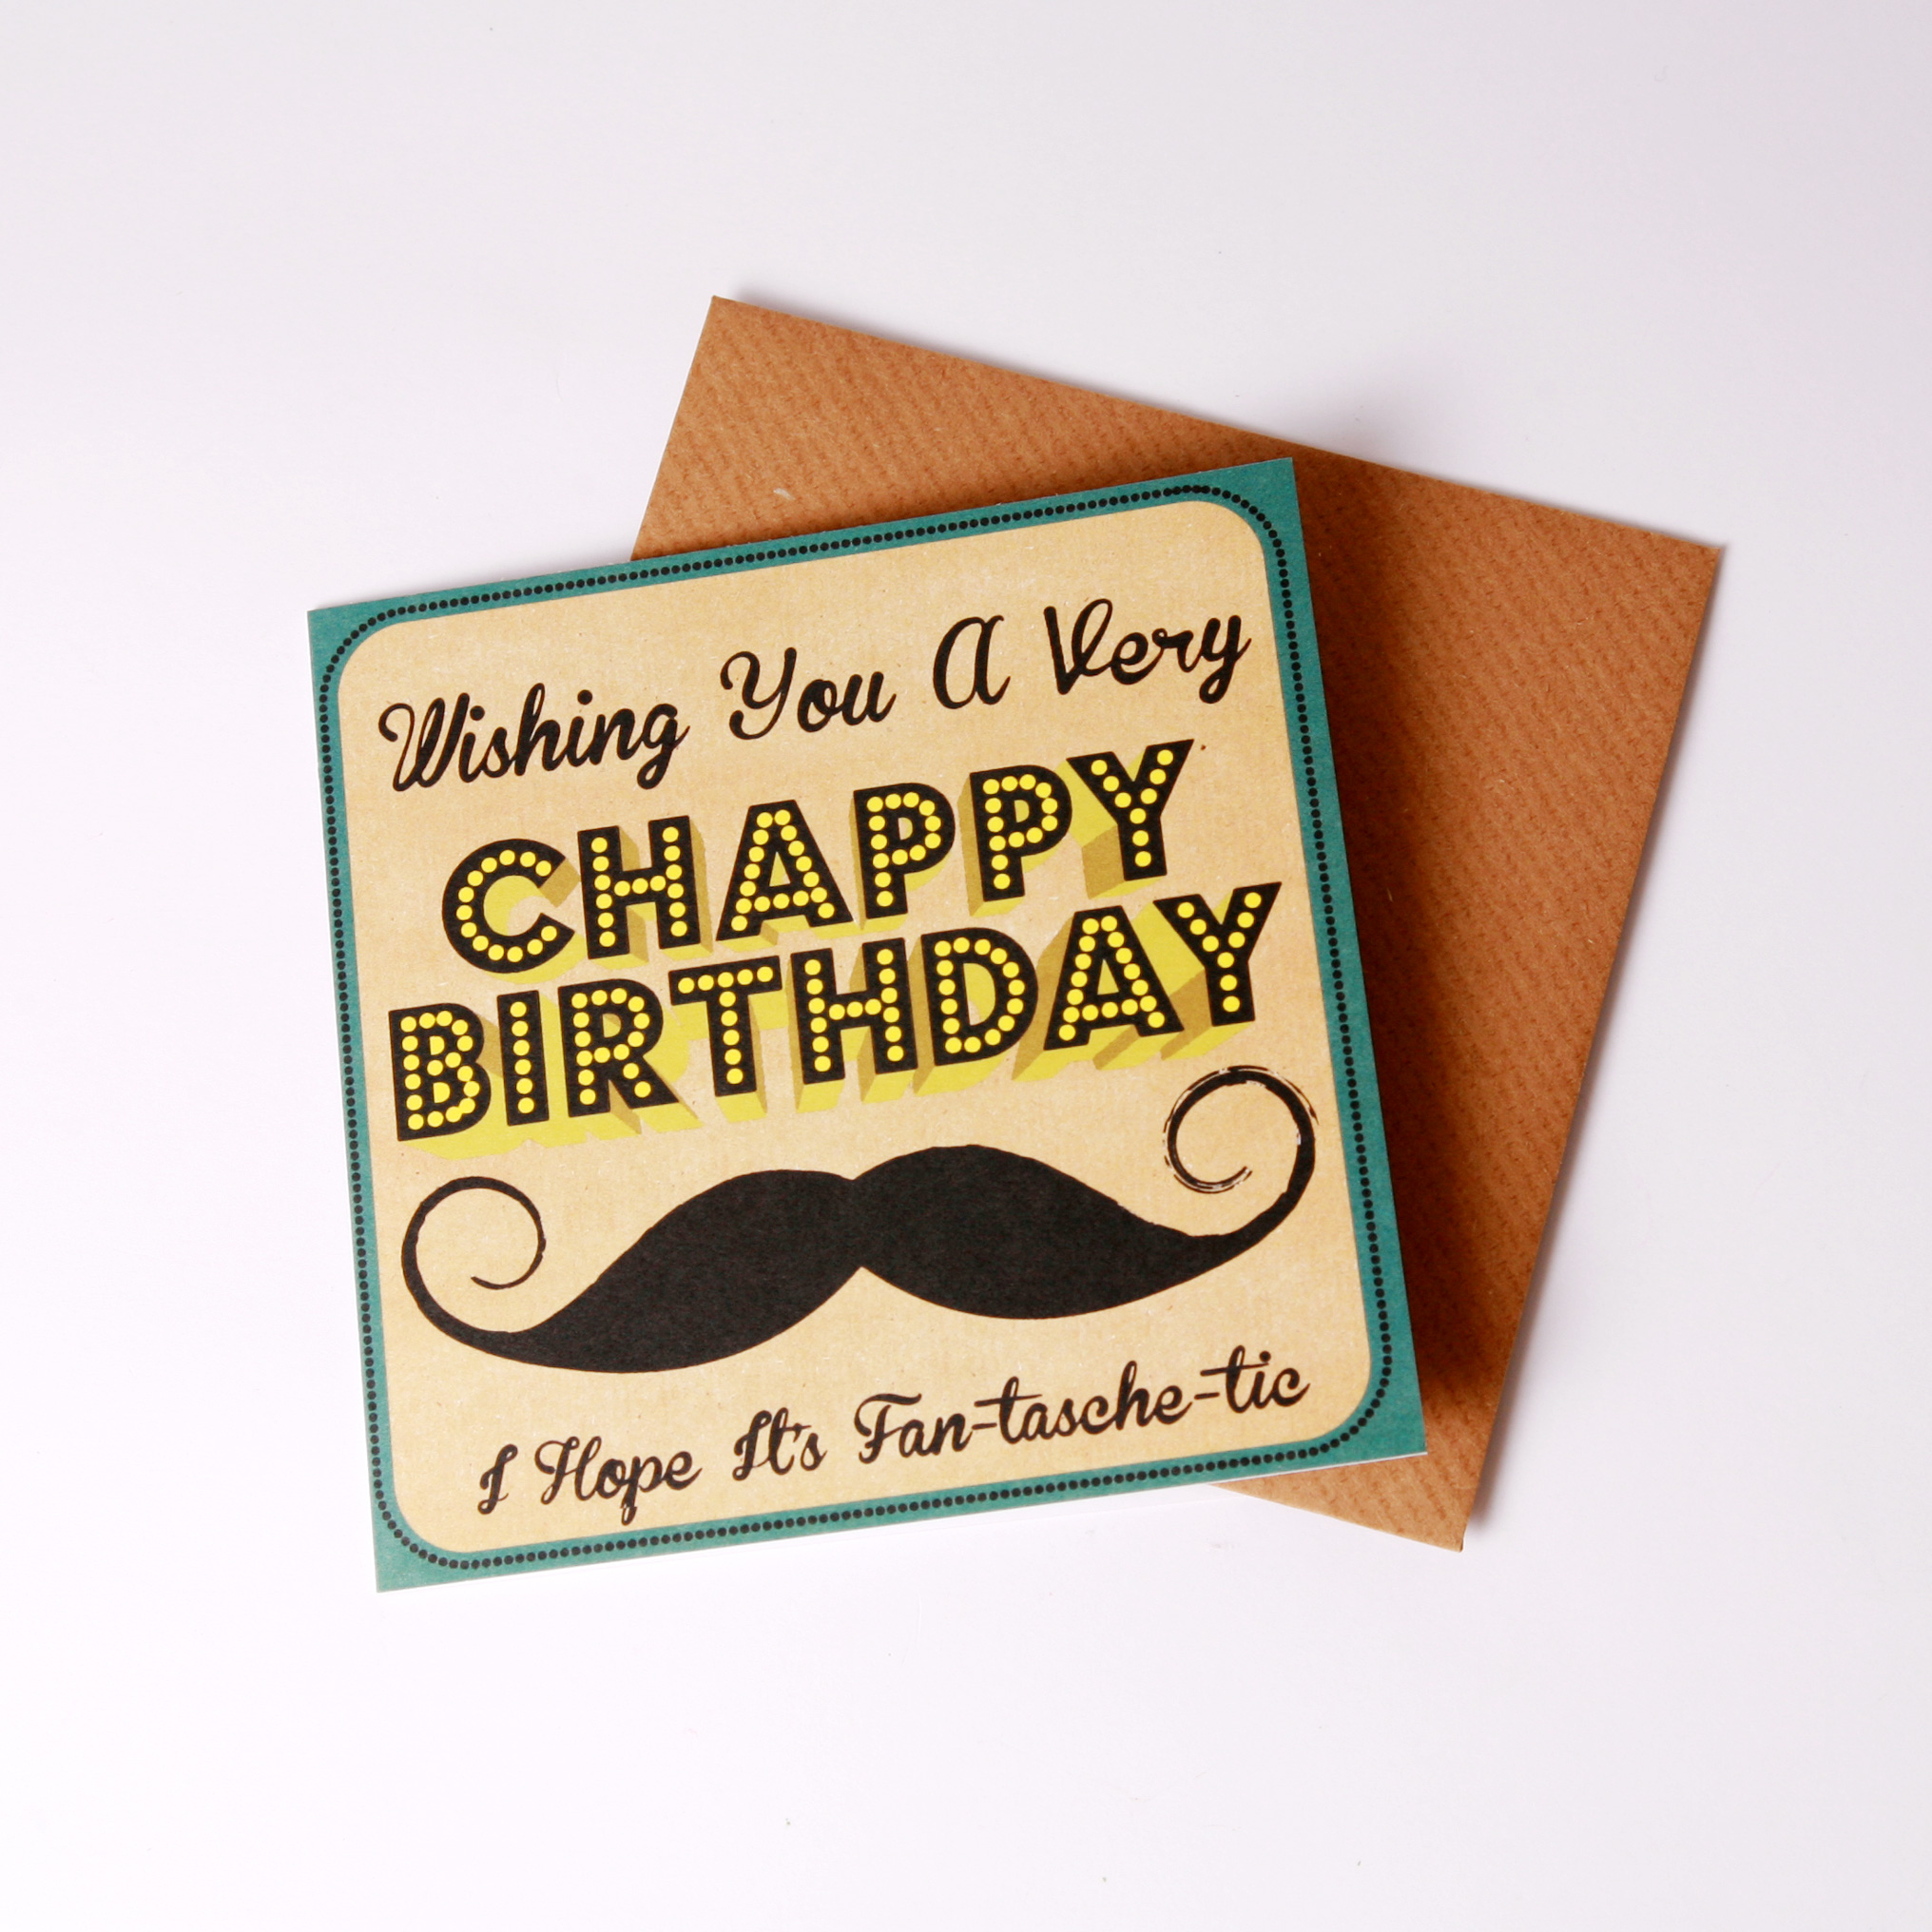 'Chappy' birthday card